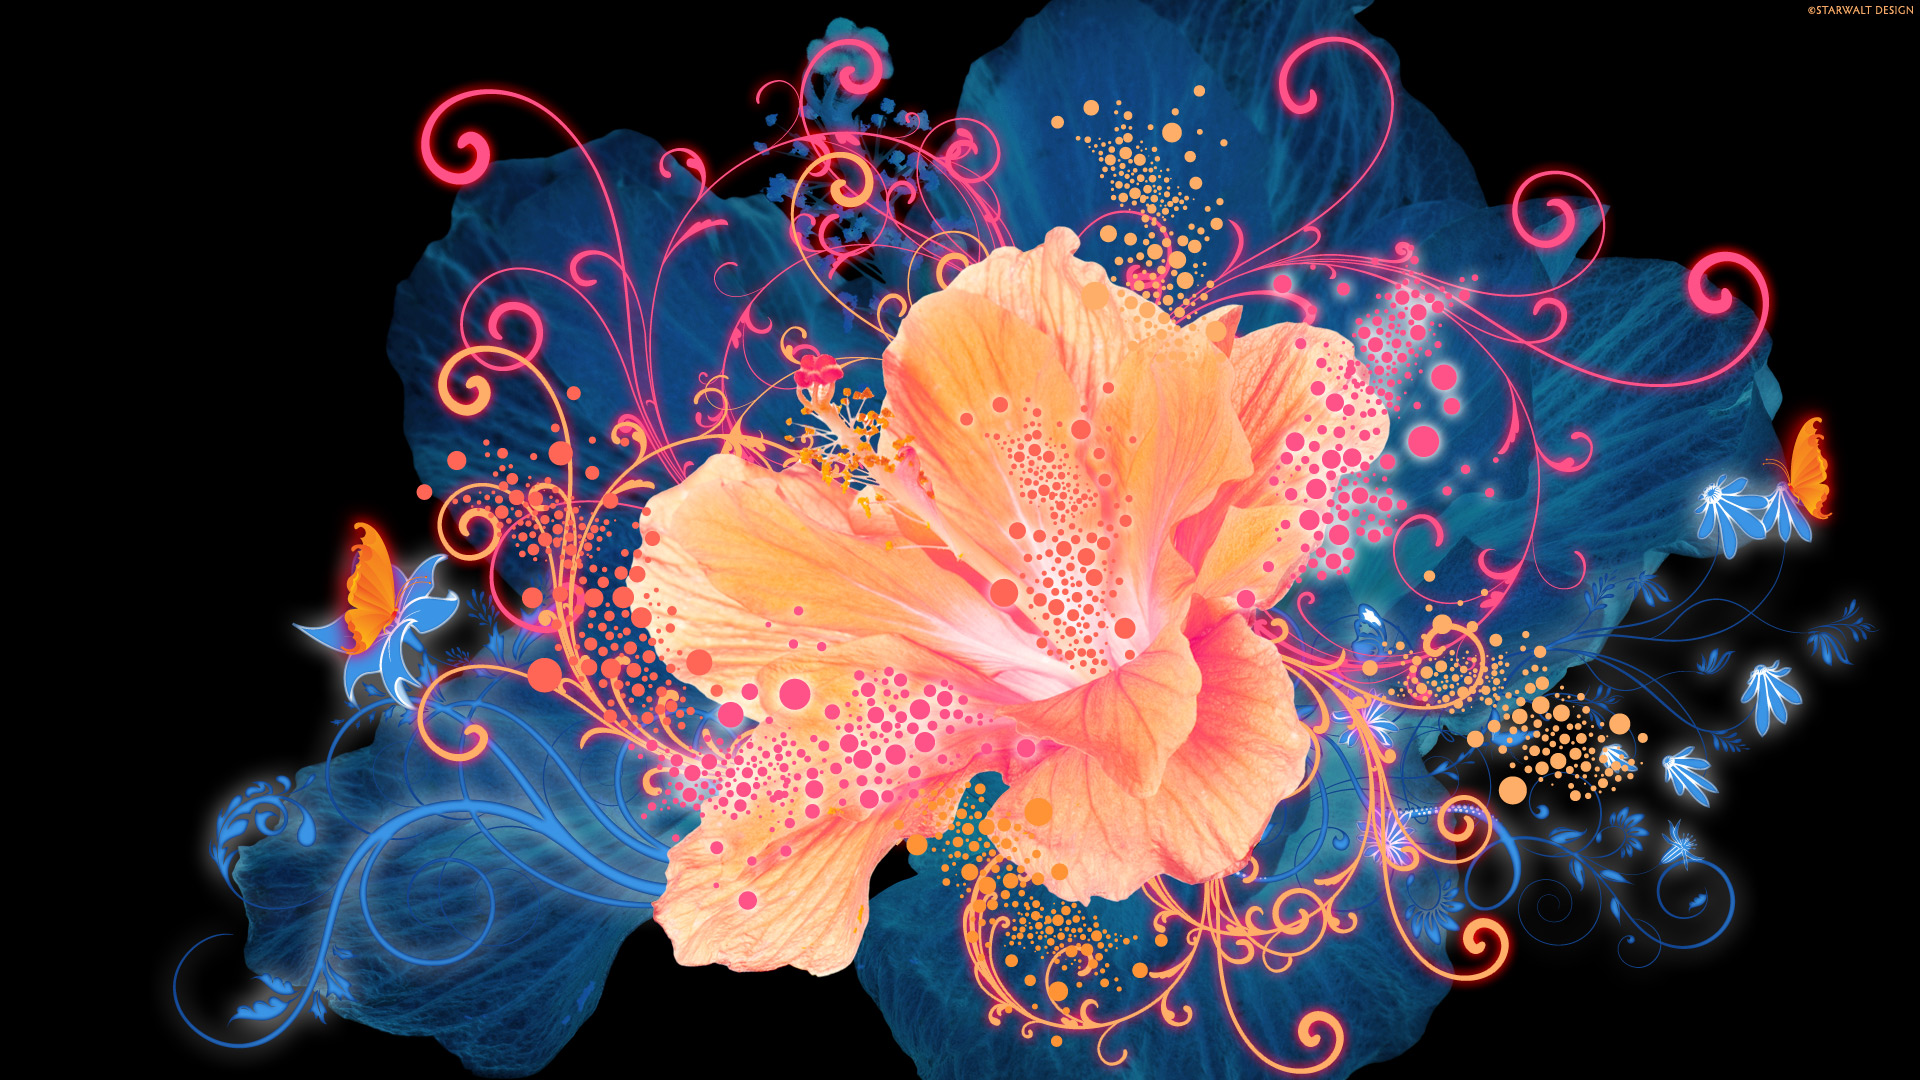 Wallpaper18 - Desktop Backgrounds Psychedelic Flowers - HD Wallpaper 